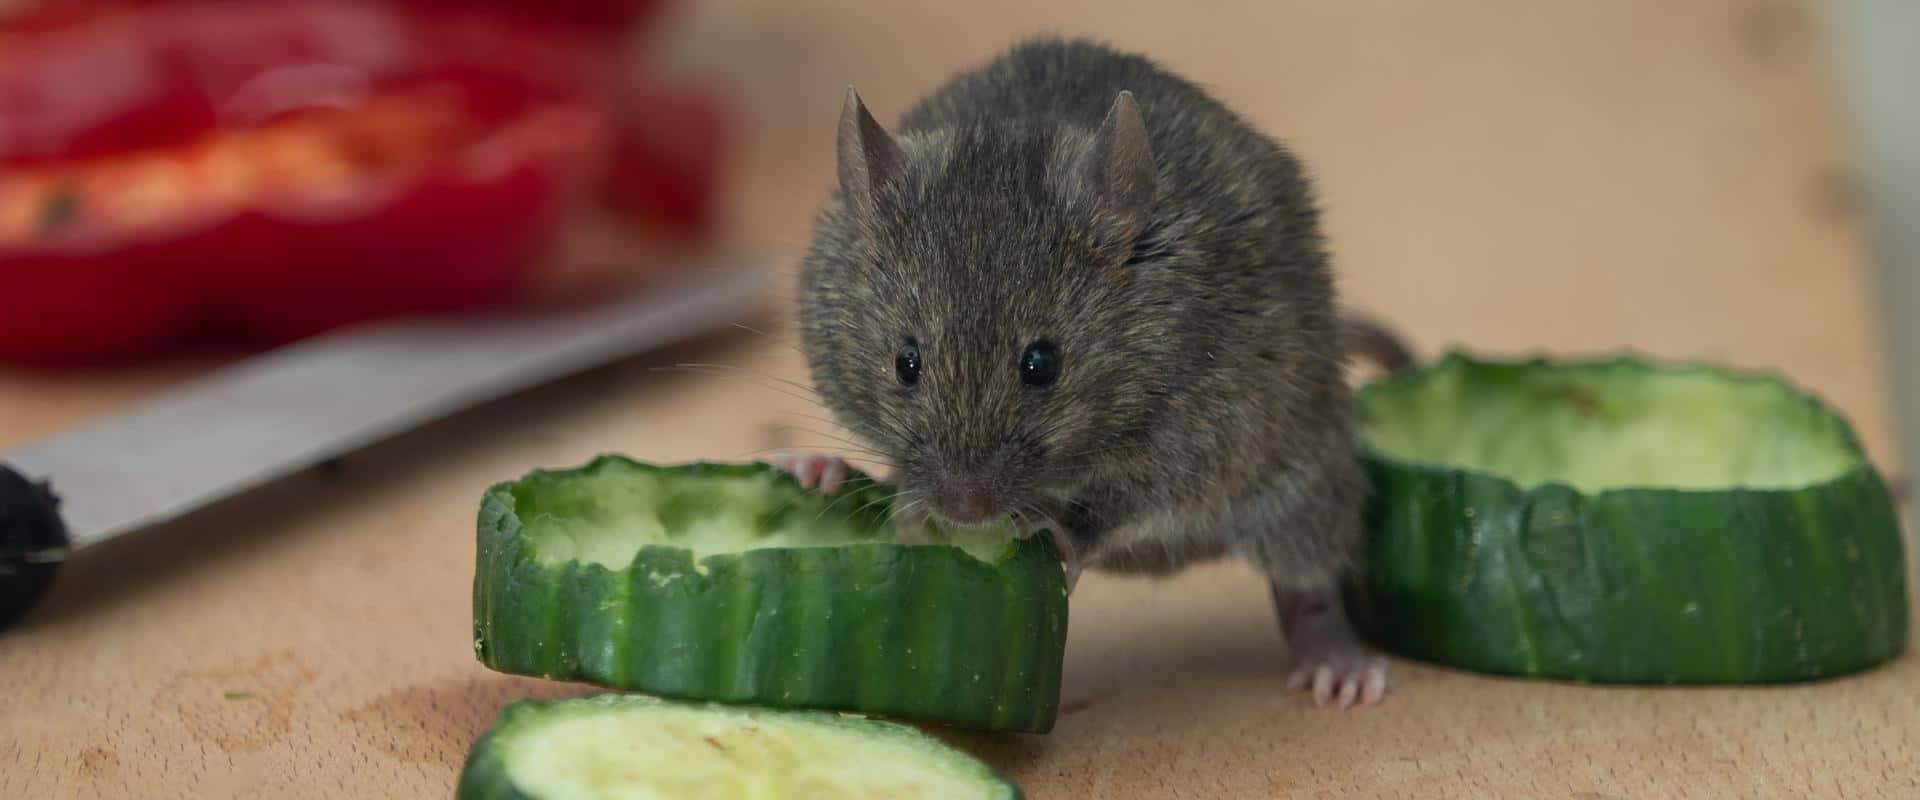 rodent eating vegetables